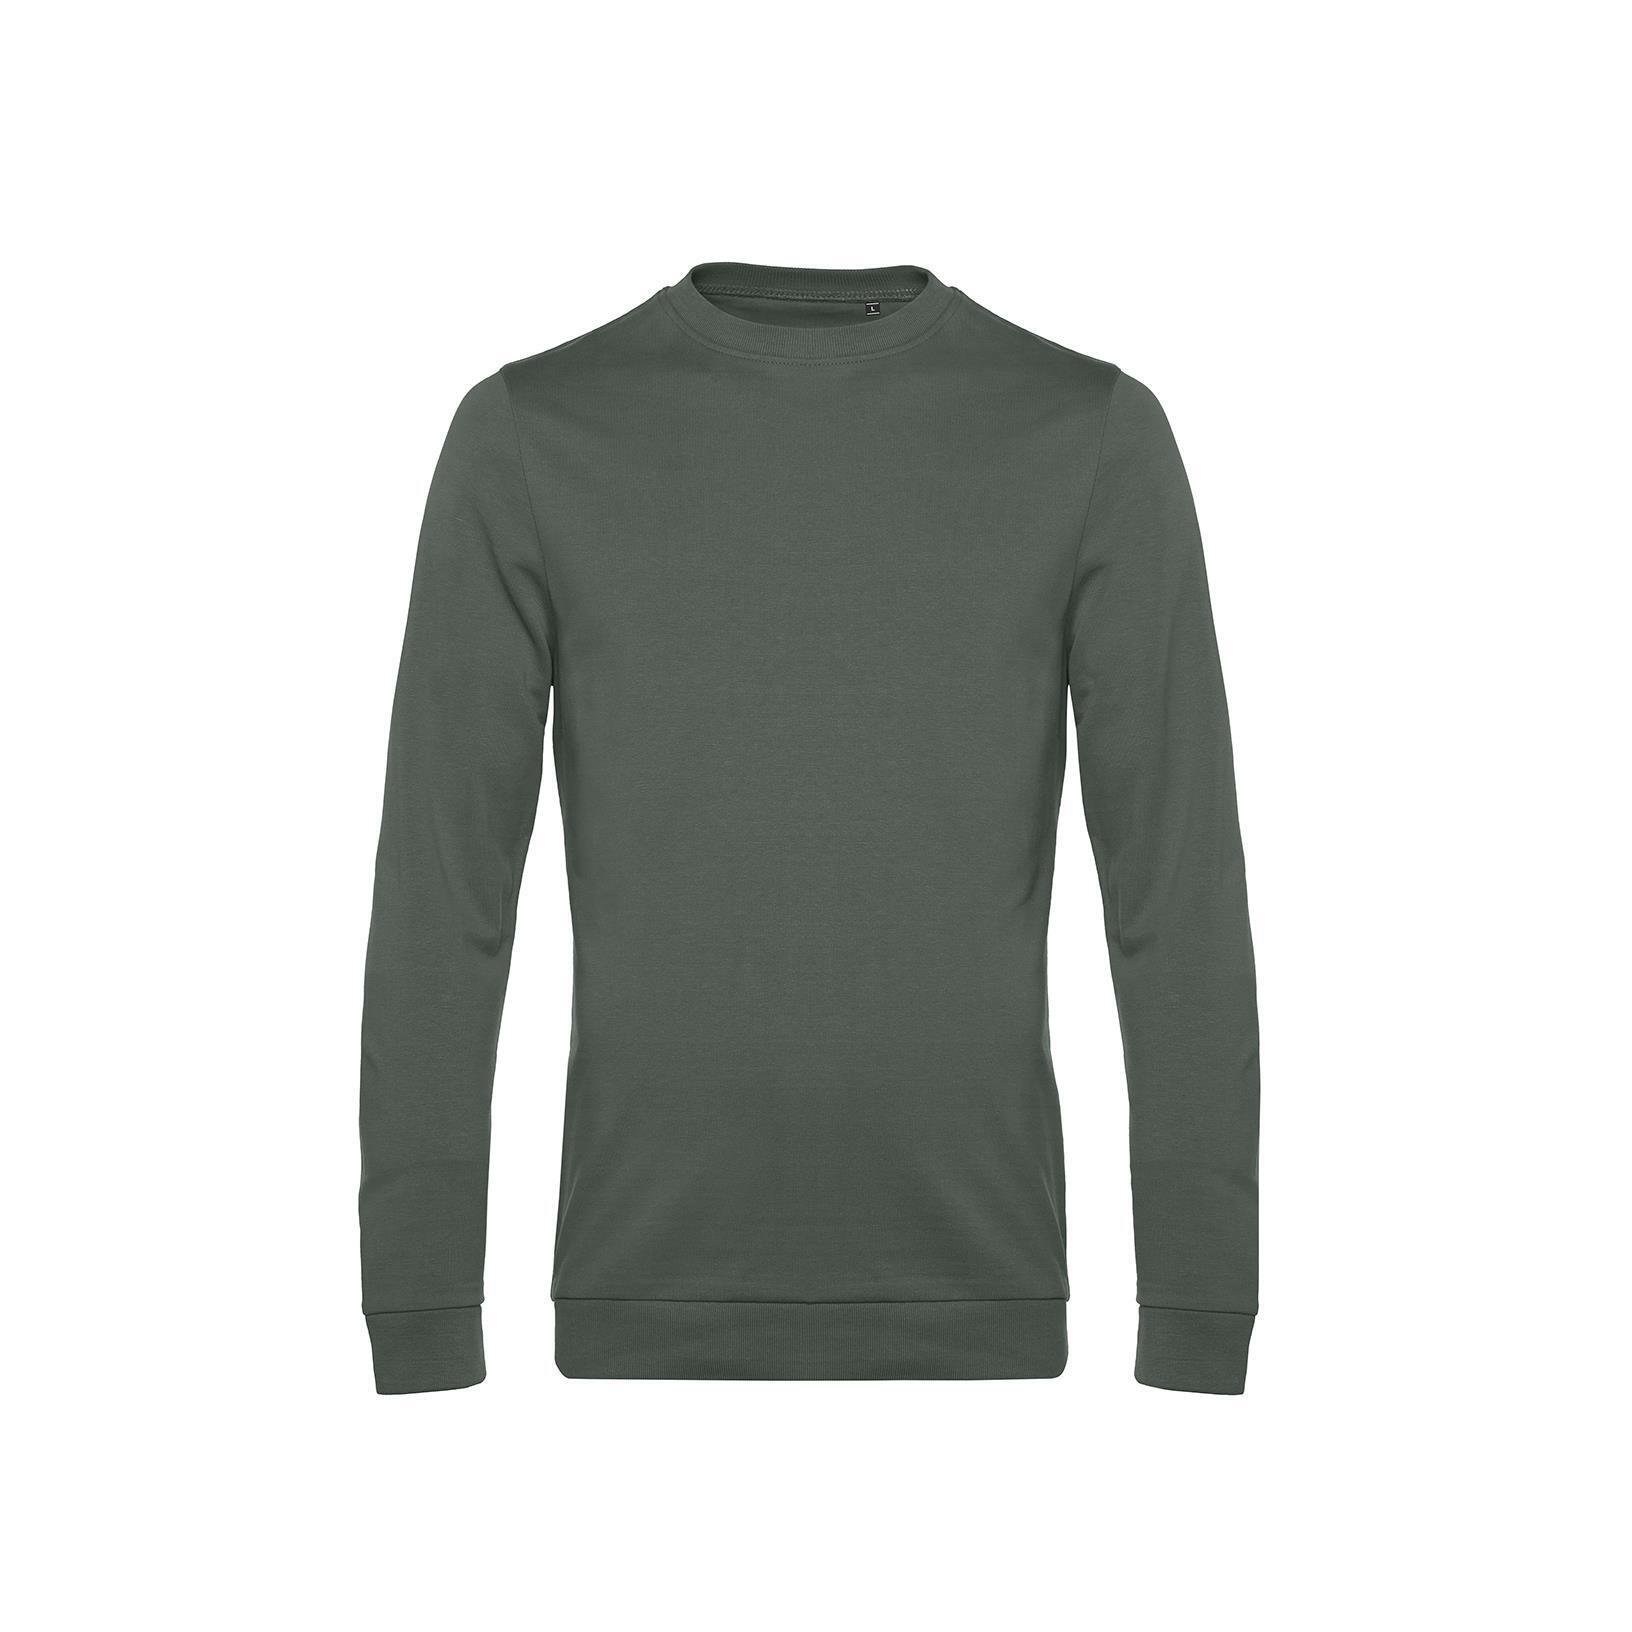 Trendy Sweater sweatshirt trui unisex heren Kaki kleur